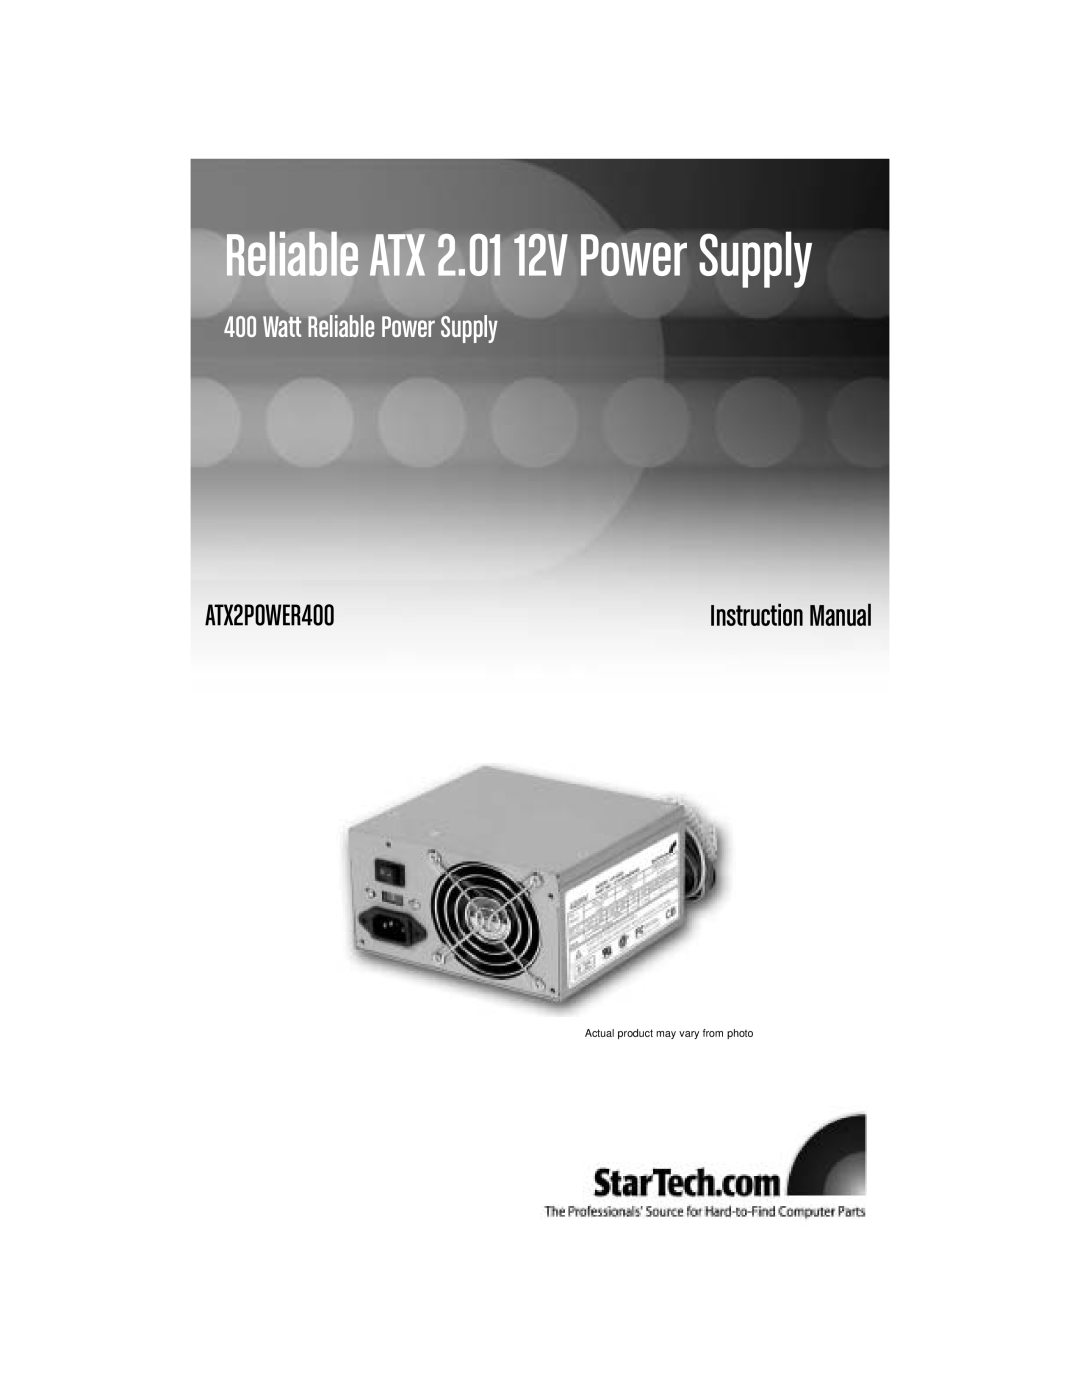 StarTech.com ATX2POWER400 instruction manual Reliable ATX 2.01 12V Power Supply, Watt Reliable Power Supply 